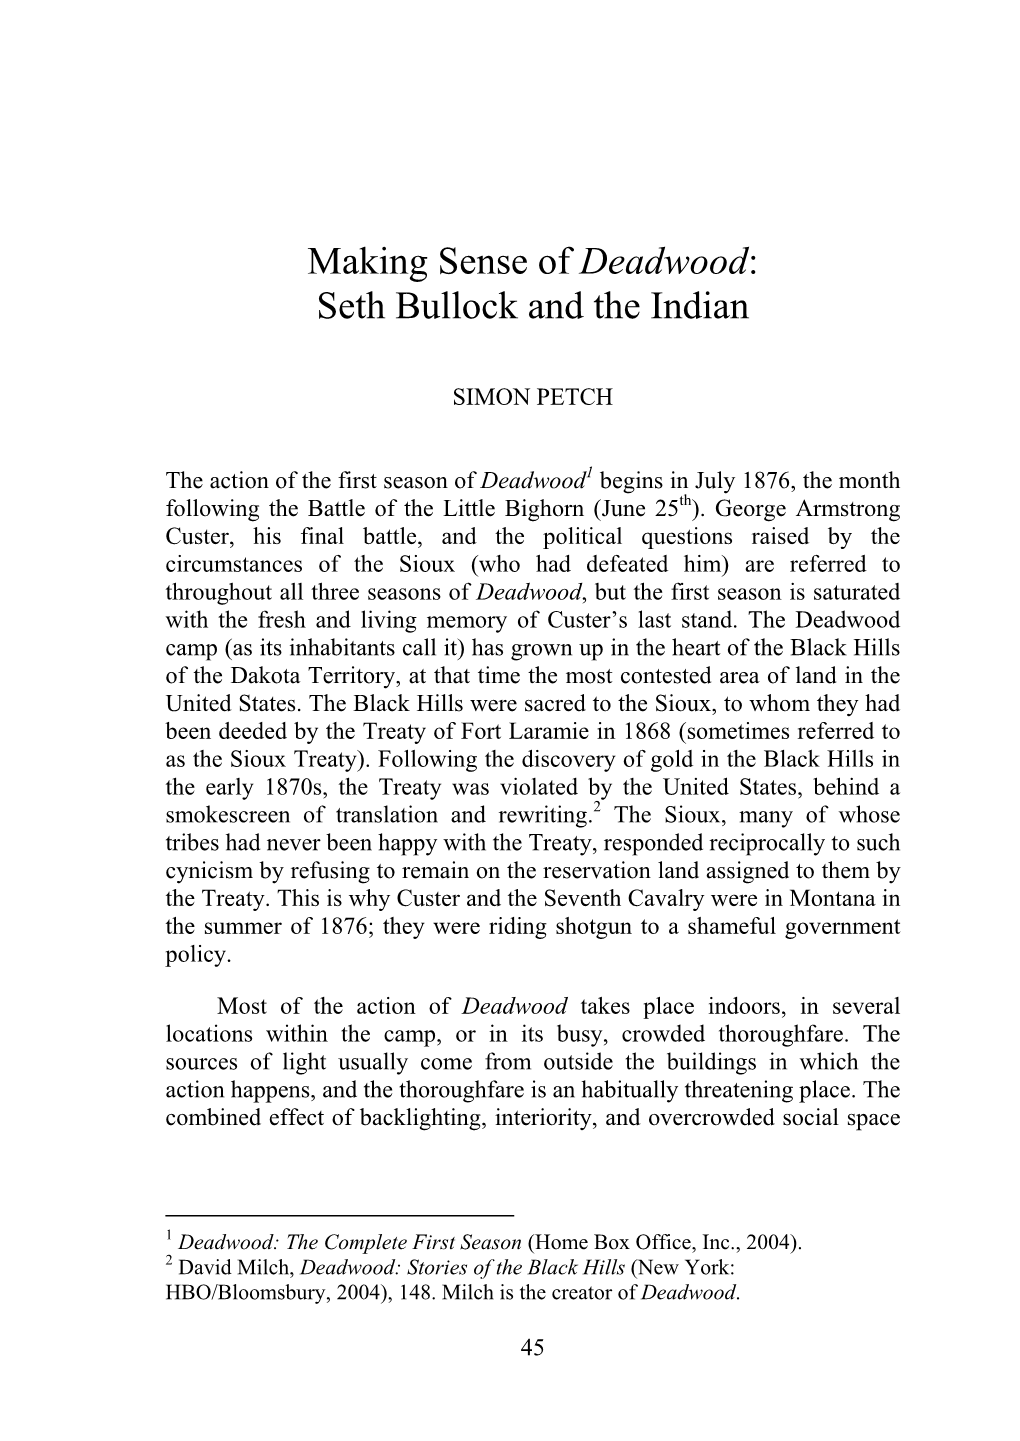 Making Sense of Deadwood: Seth Bullock and the Indian